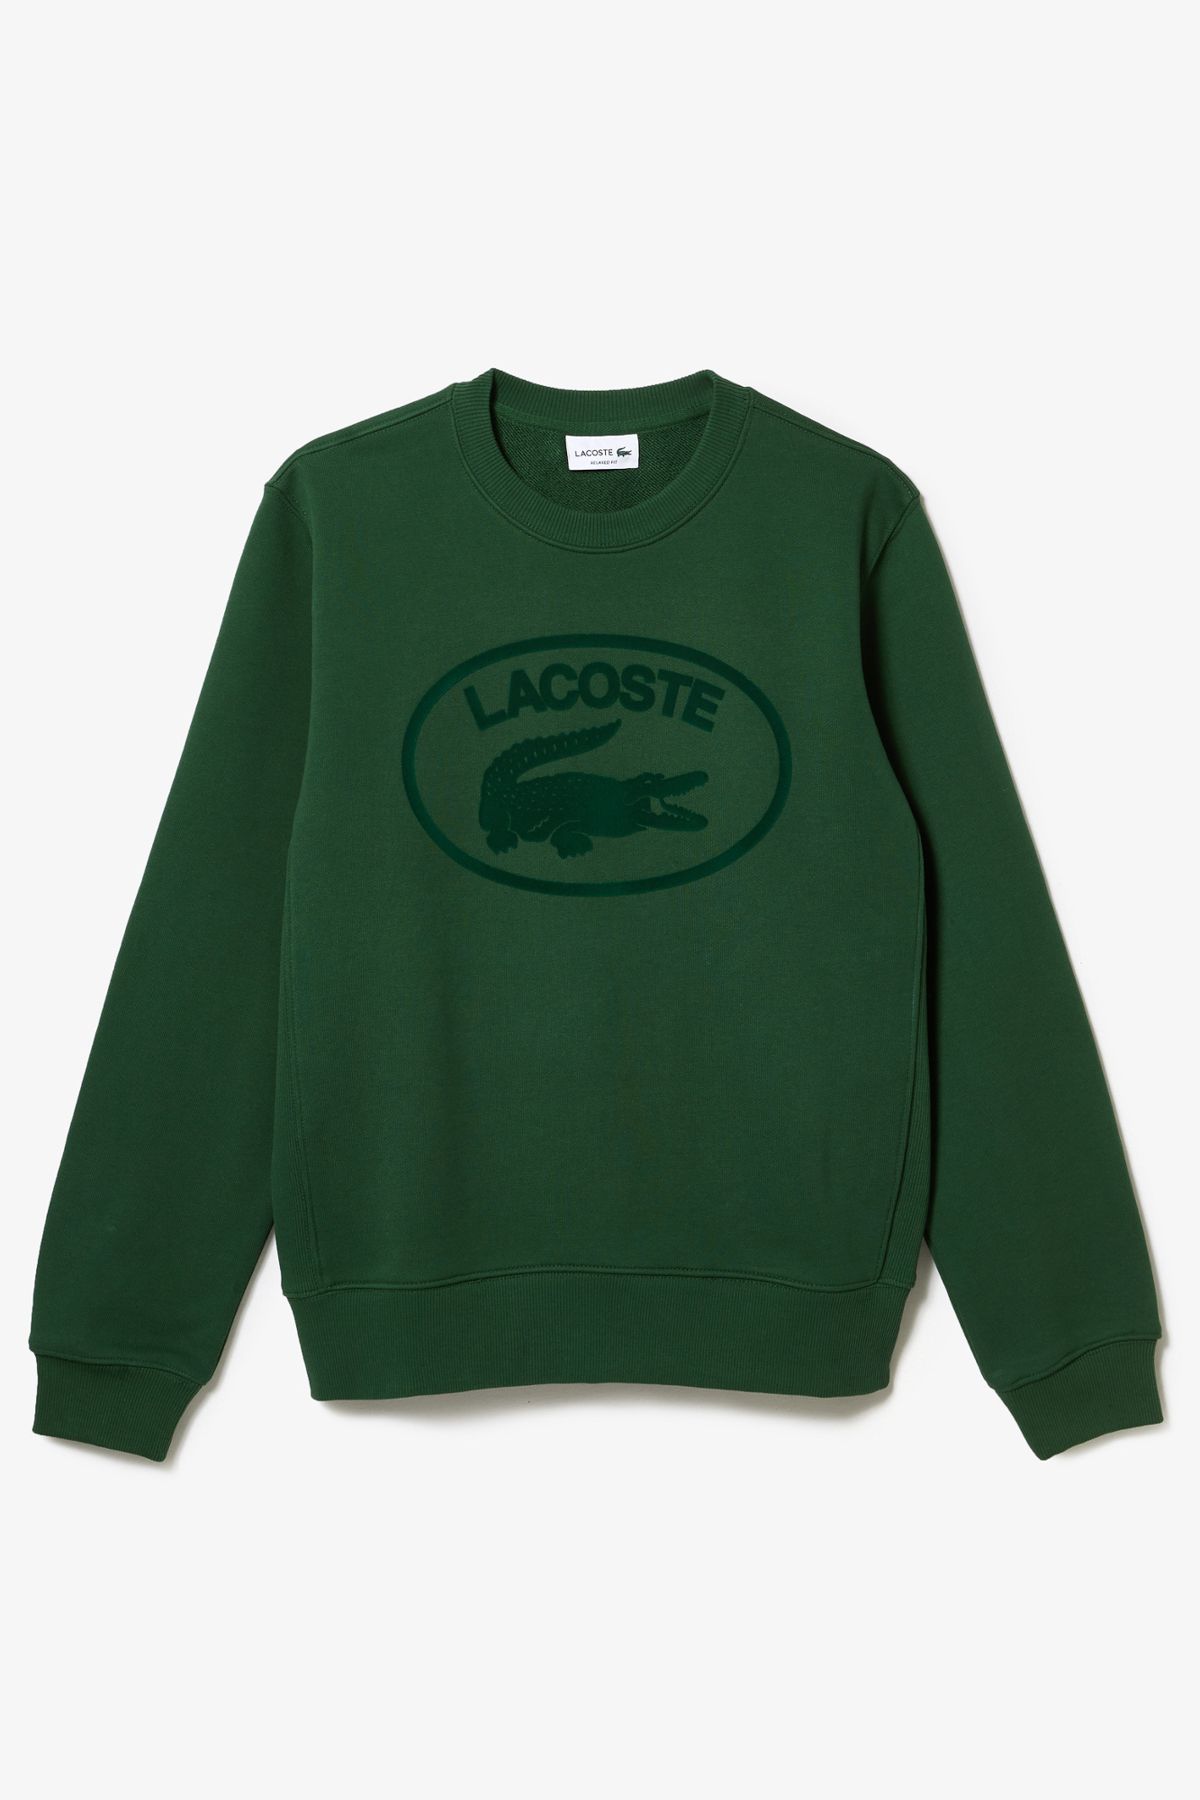 Lacoste Sweatshirt - Grün Regular - Fit Trendyol 